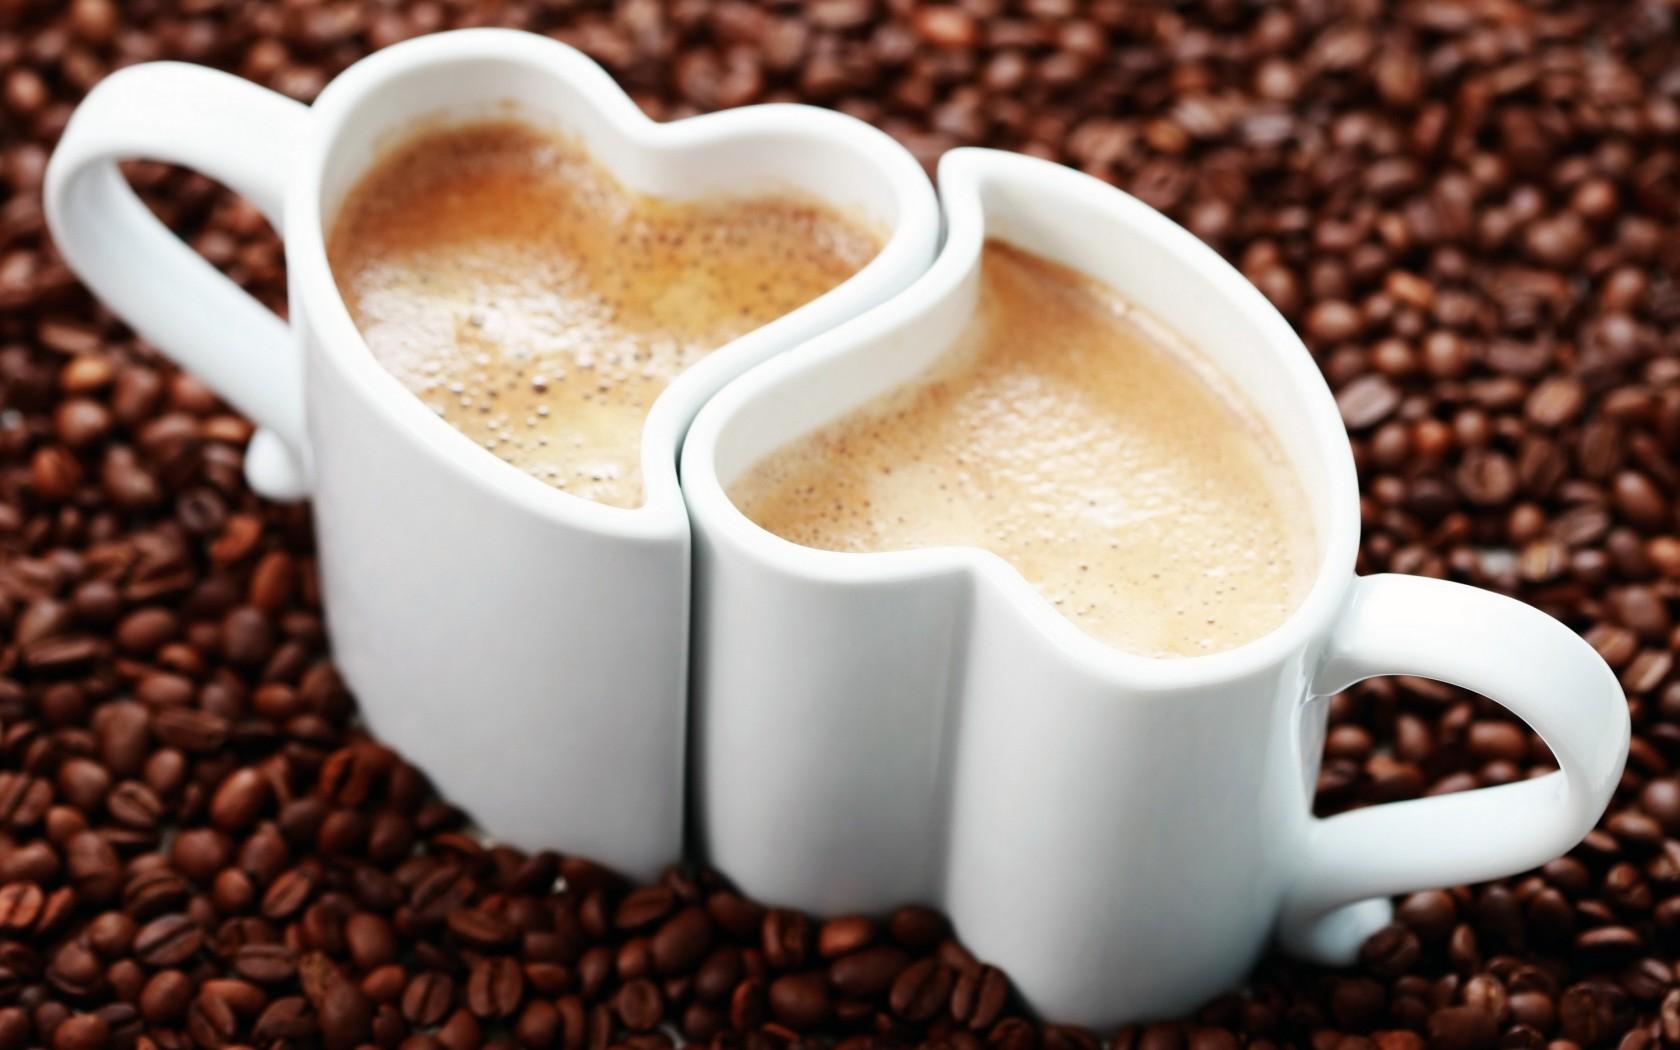 mood cup mug mugs heart coffee cappuccino coffee beans grain